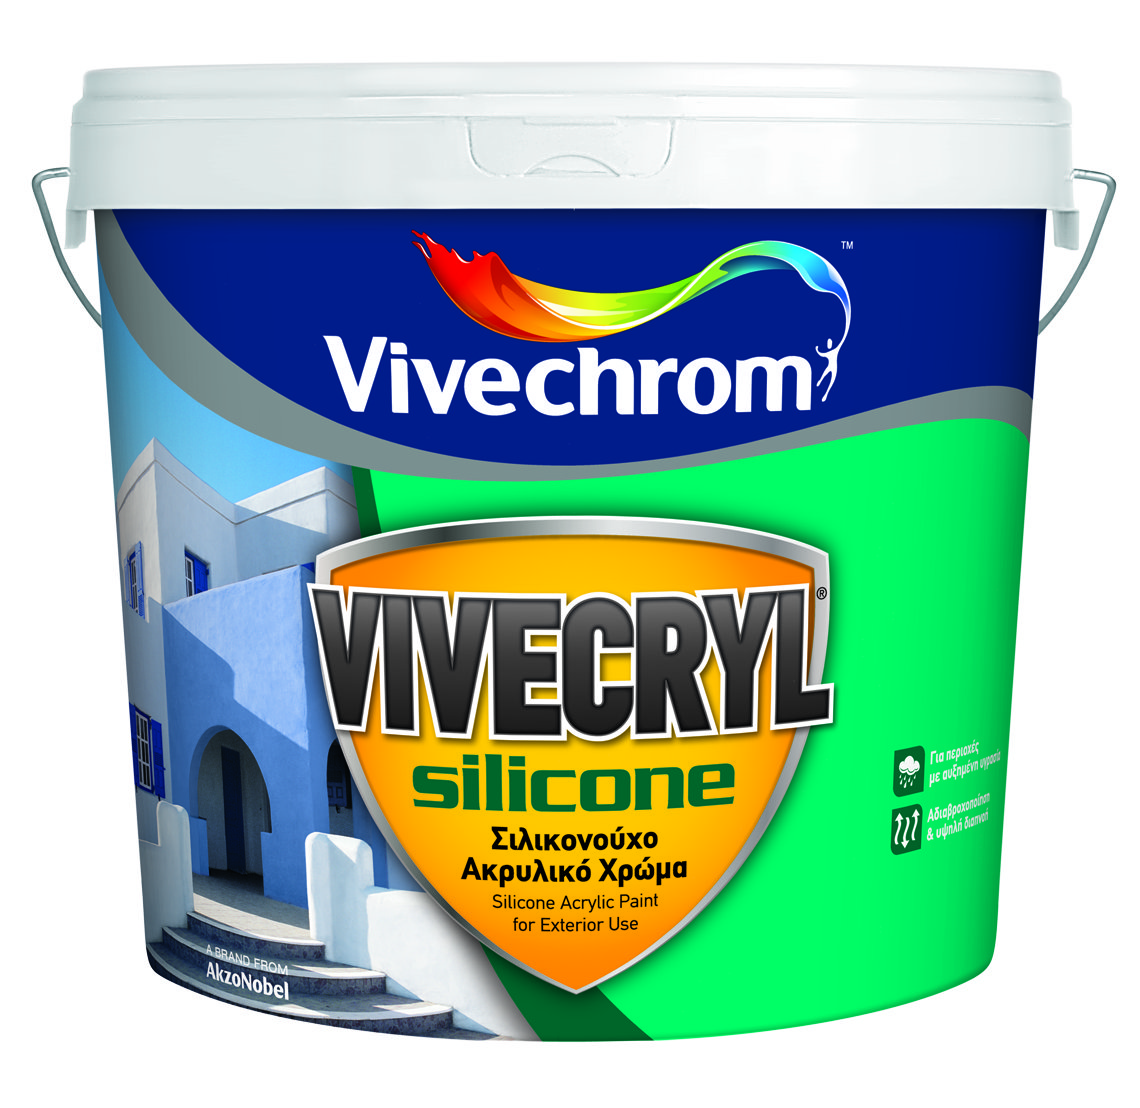 Vivechrom Vivecryl Silicone Οικολογικό Ακρυλική Βάση Matt Finish D 3L